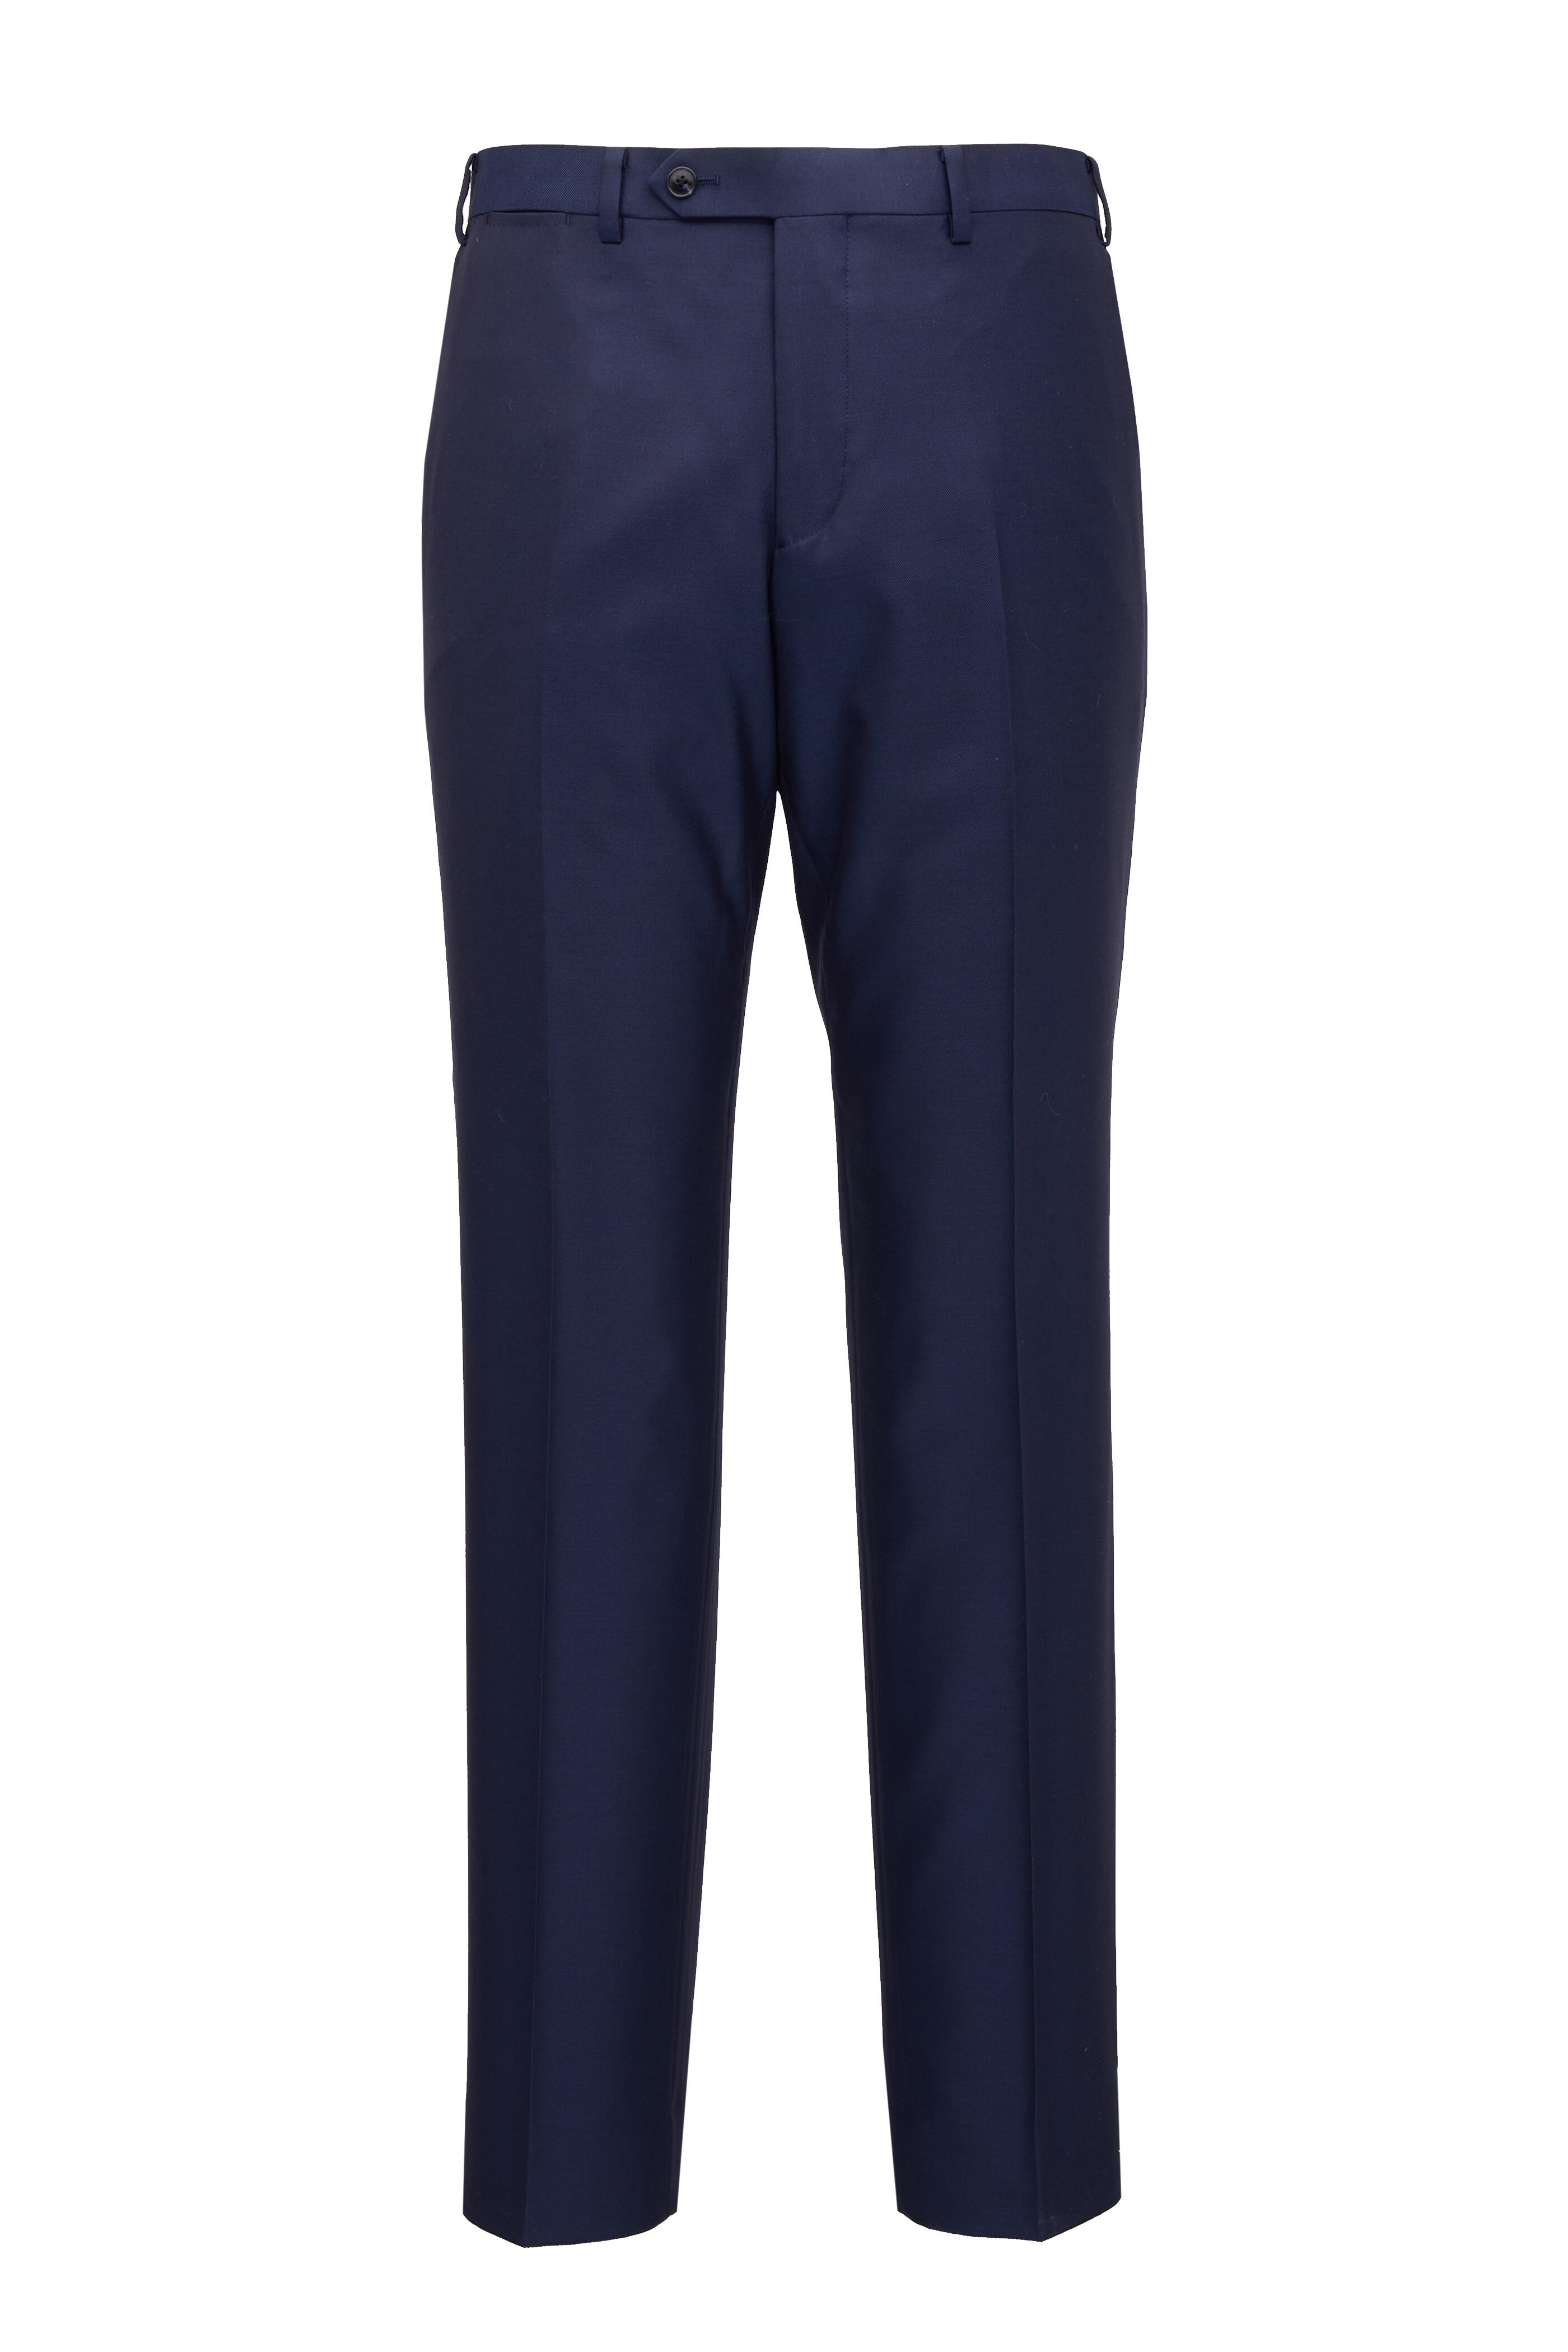 Atelier Munro - Medium Blue Wool Twill Suit | Mitchell Stores